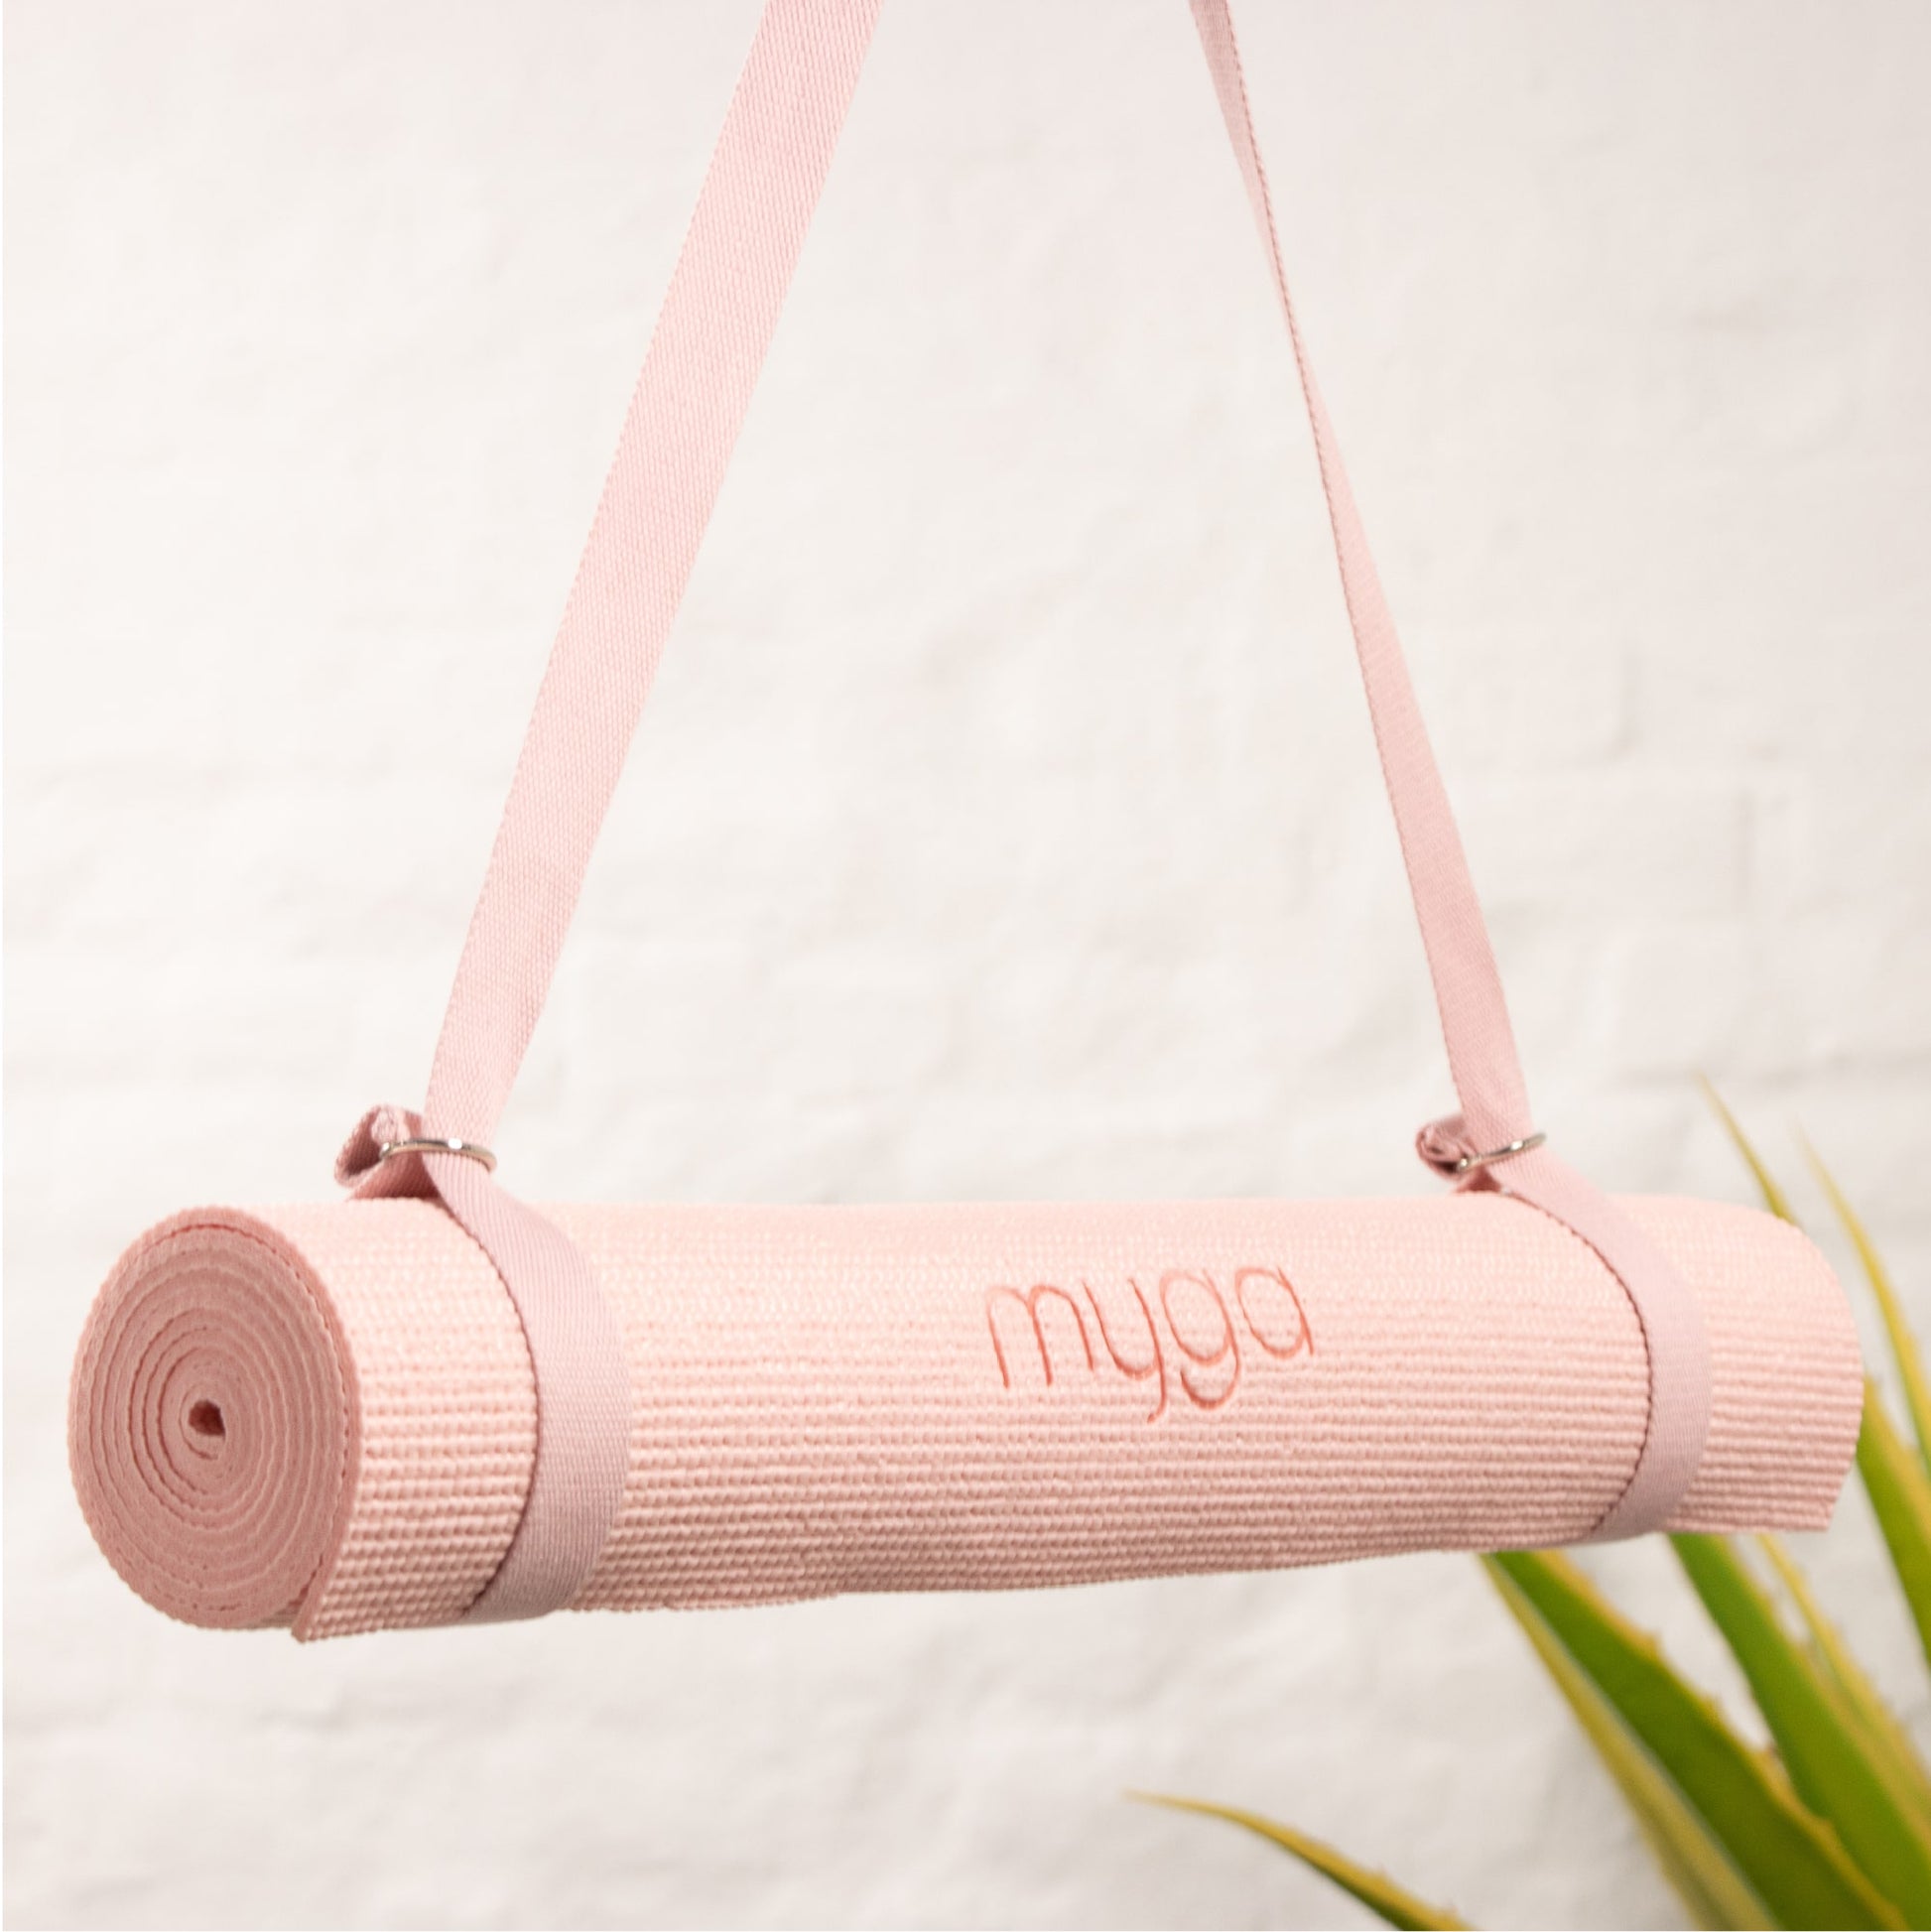  Myga Yoga Starter Set - Yoga Mat, Yoga Block Brick & Metal  D-Ring Yoga Strap - Starter Kit for Beginners great for Pilates, Yoga,  Stretching, Health & Fitness - Complete